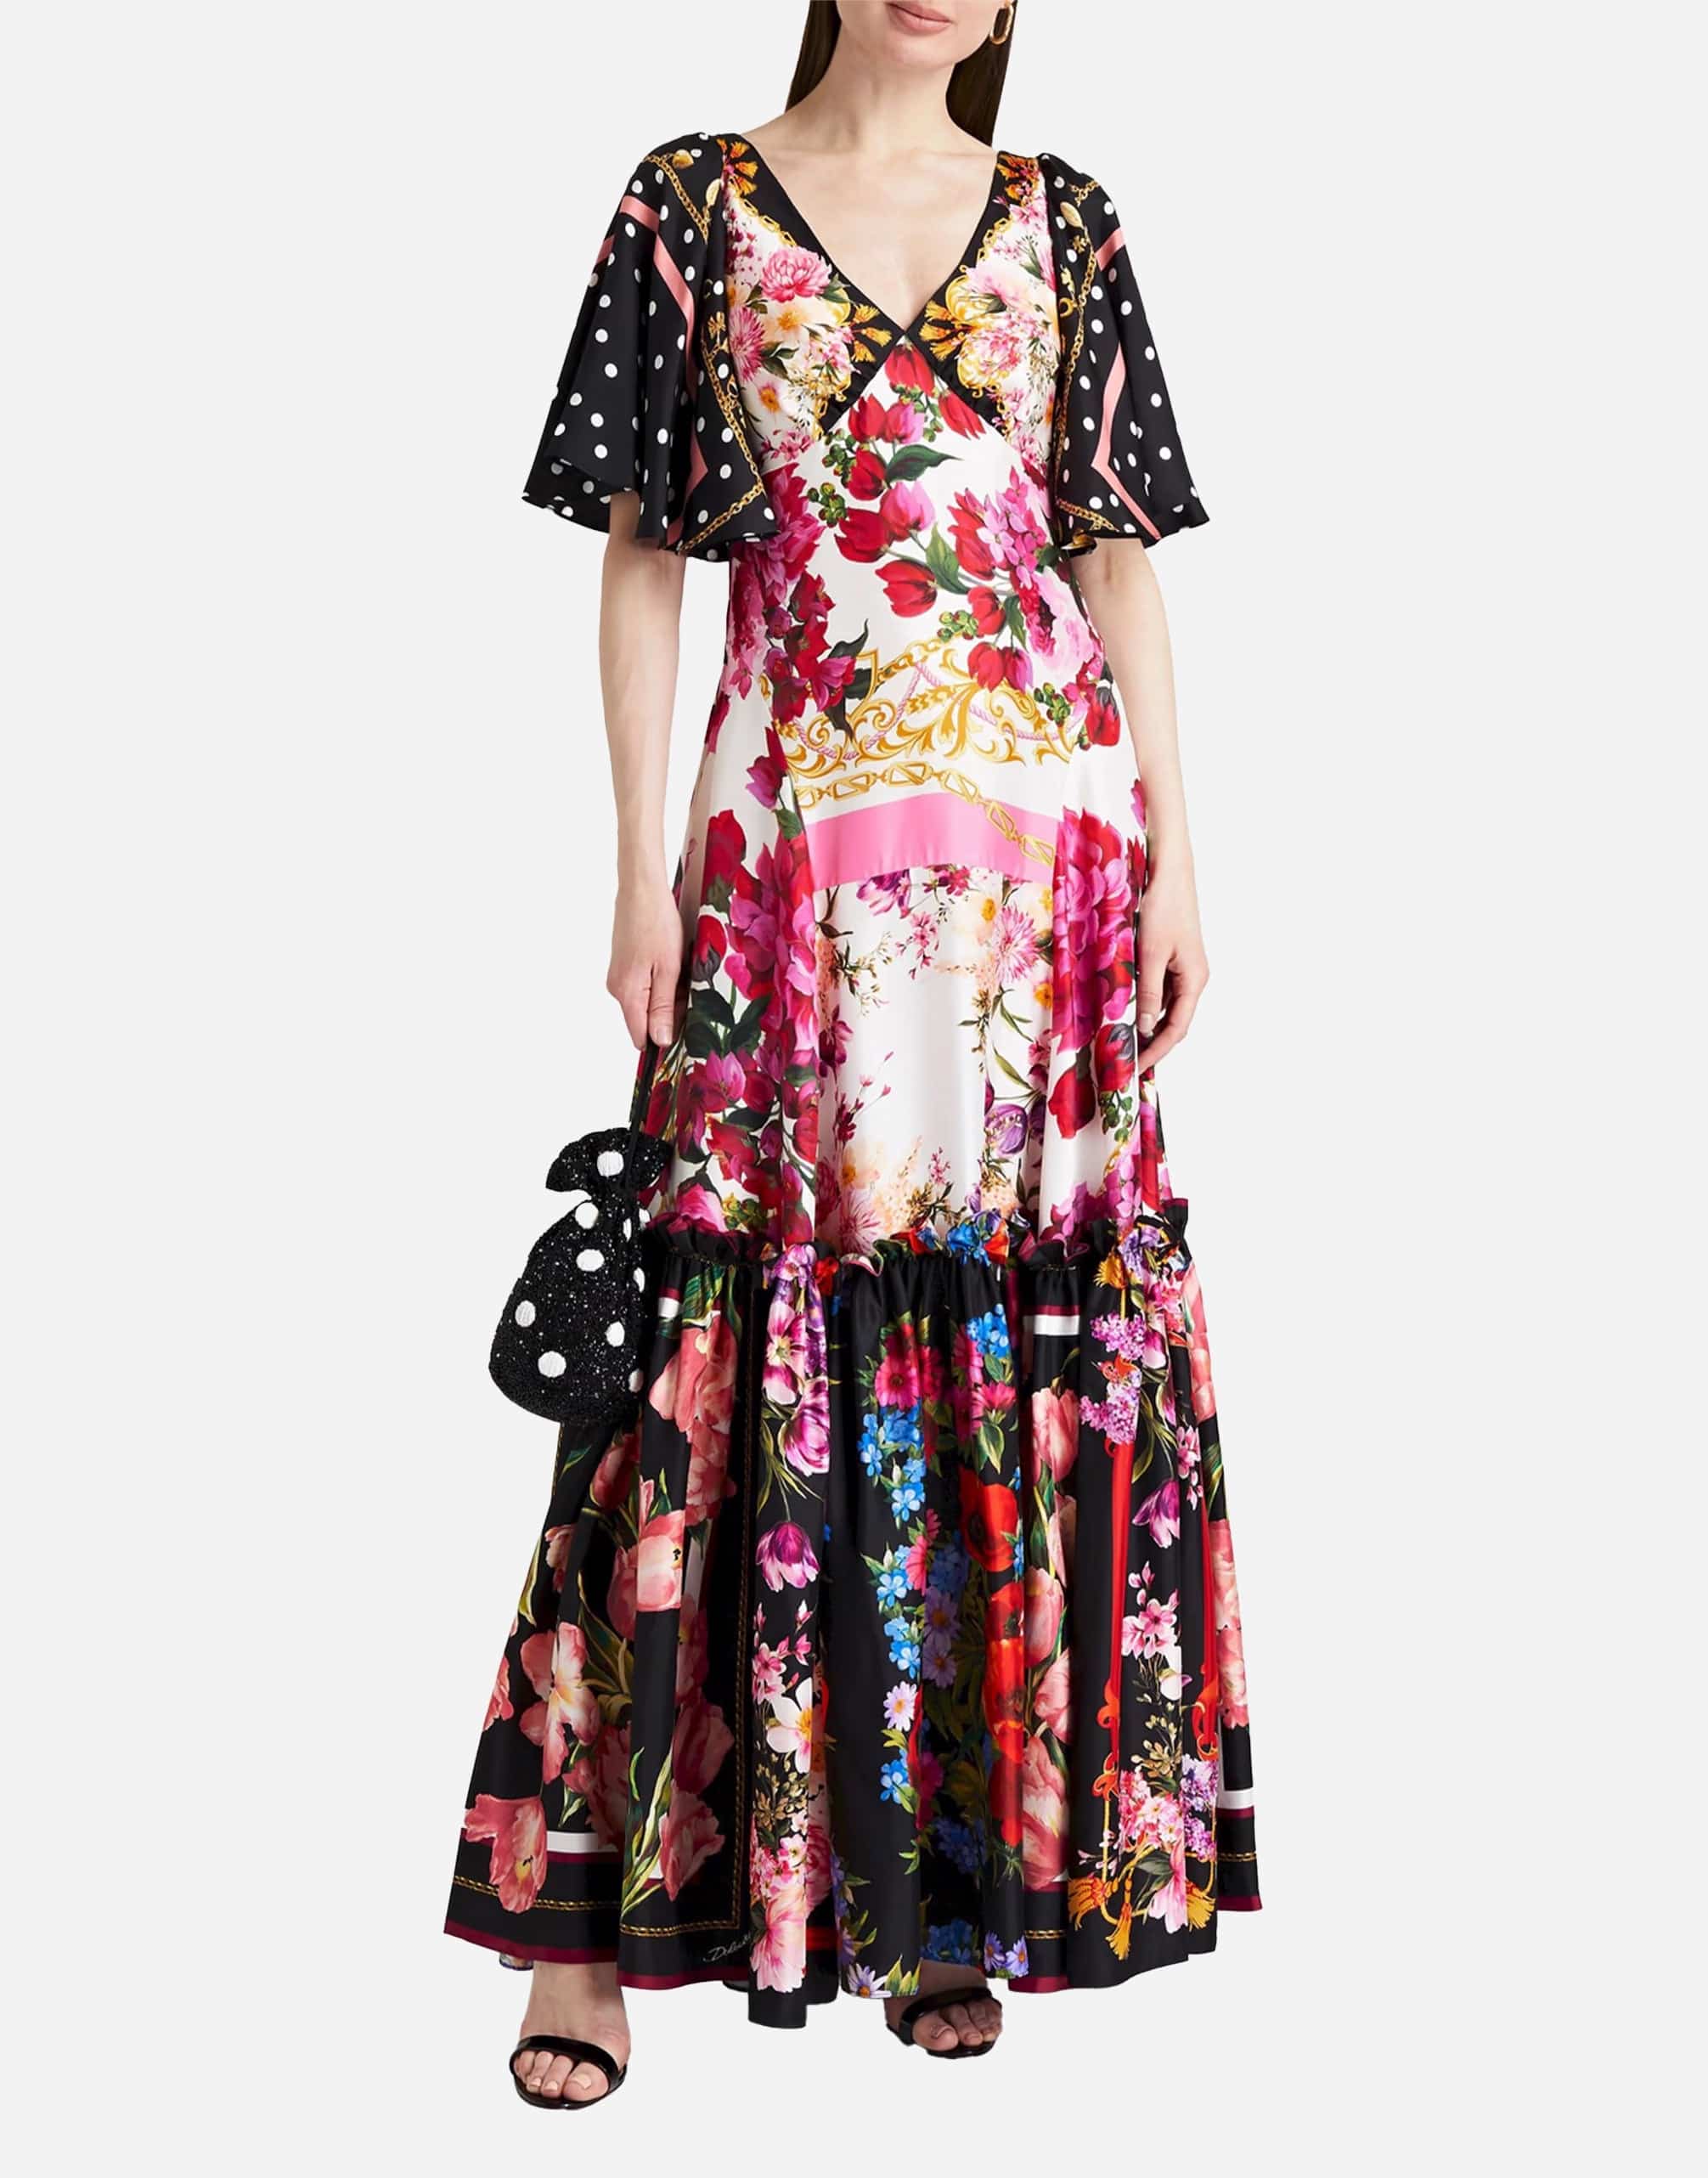 Dolce & Gabbana Gathered Floral-Print Silk Gown